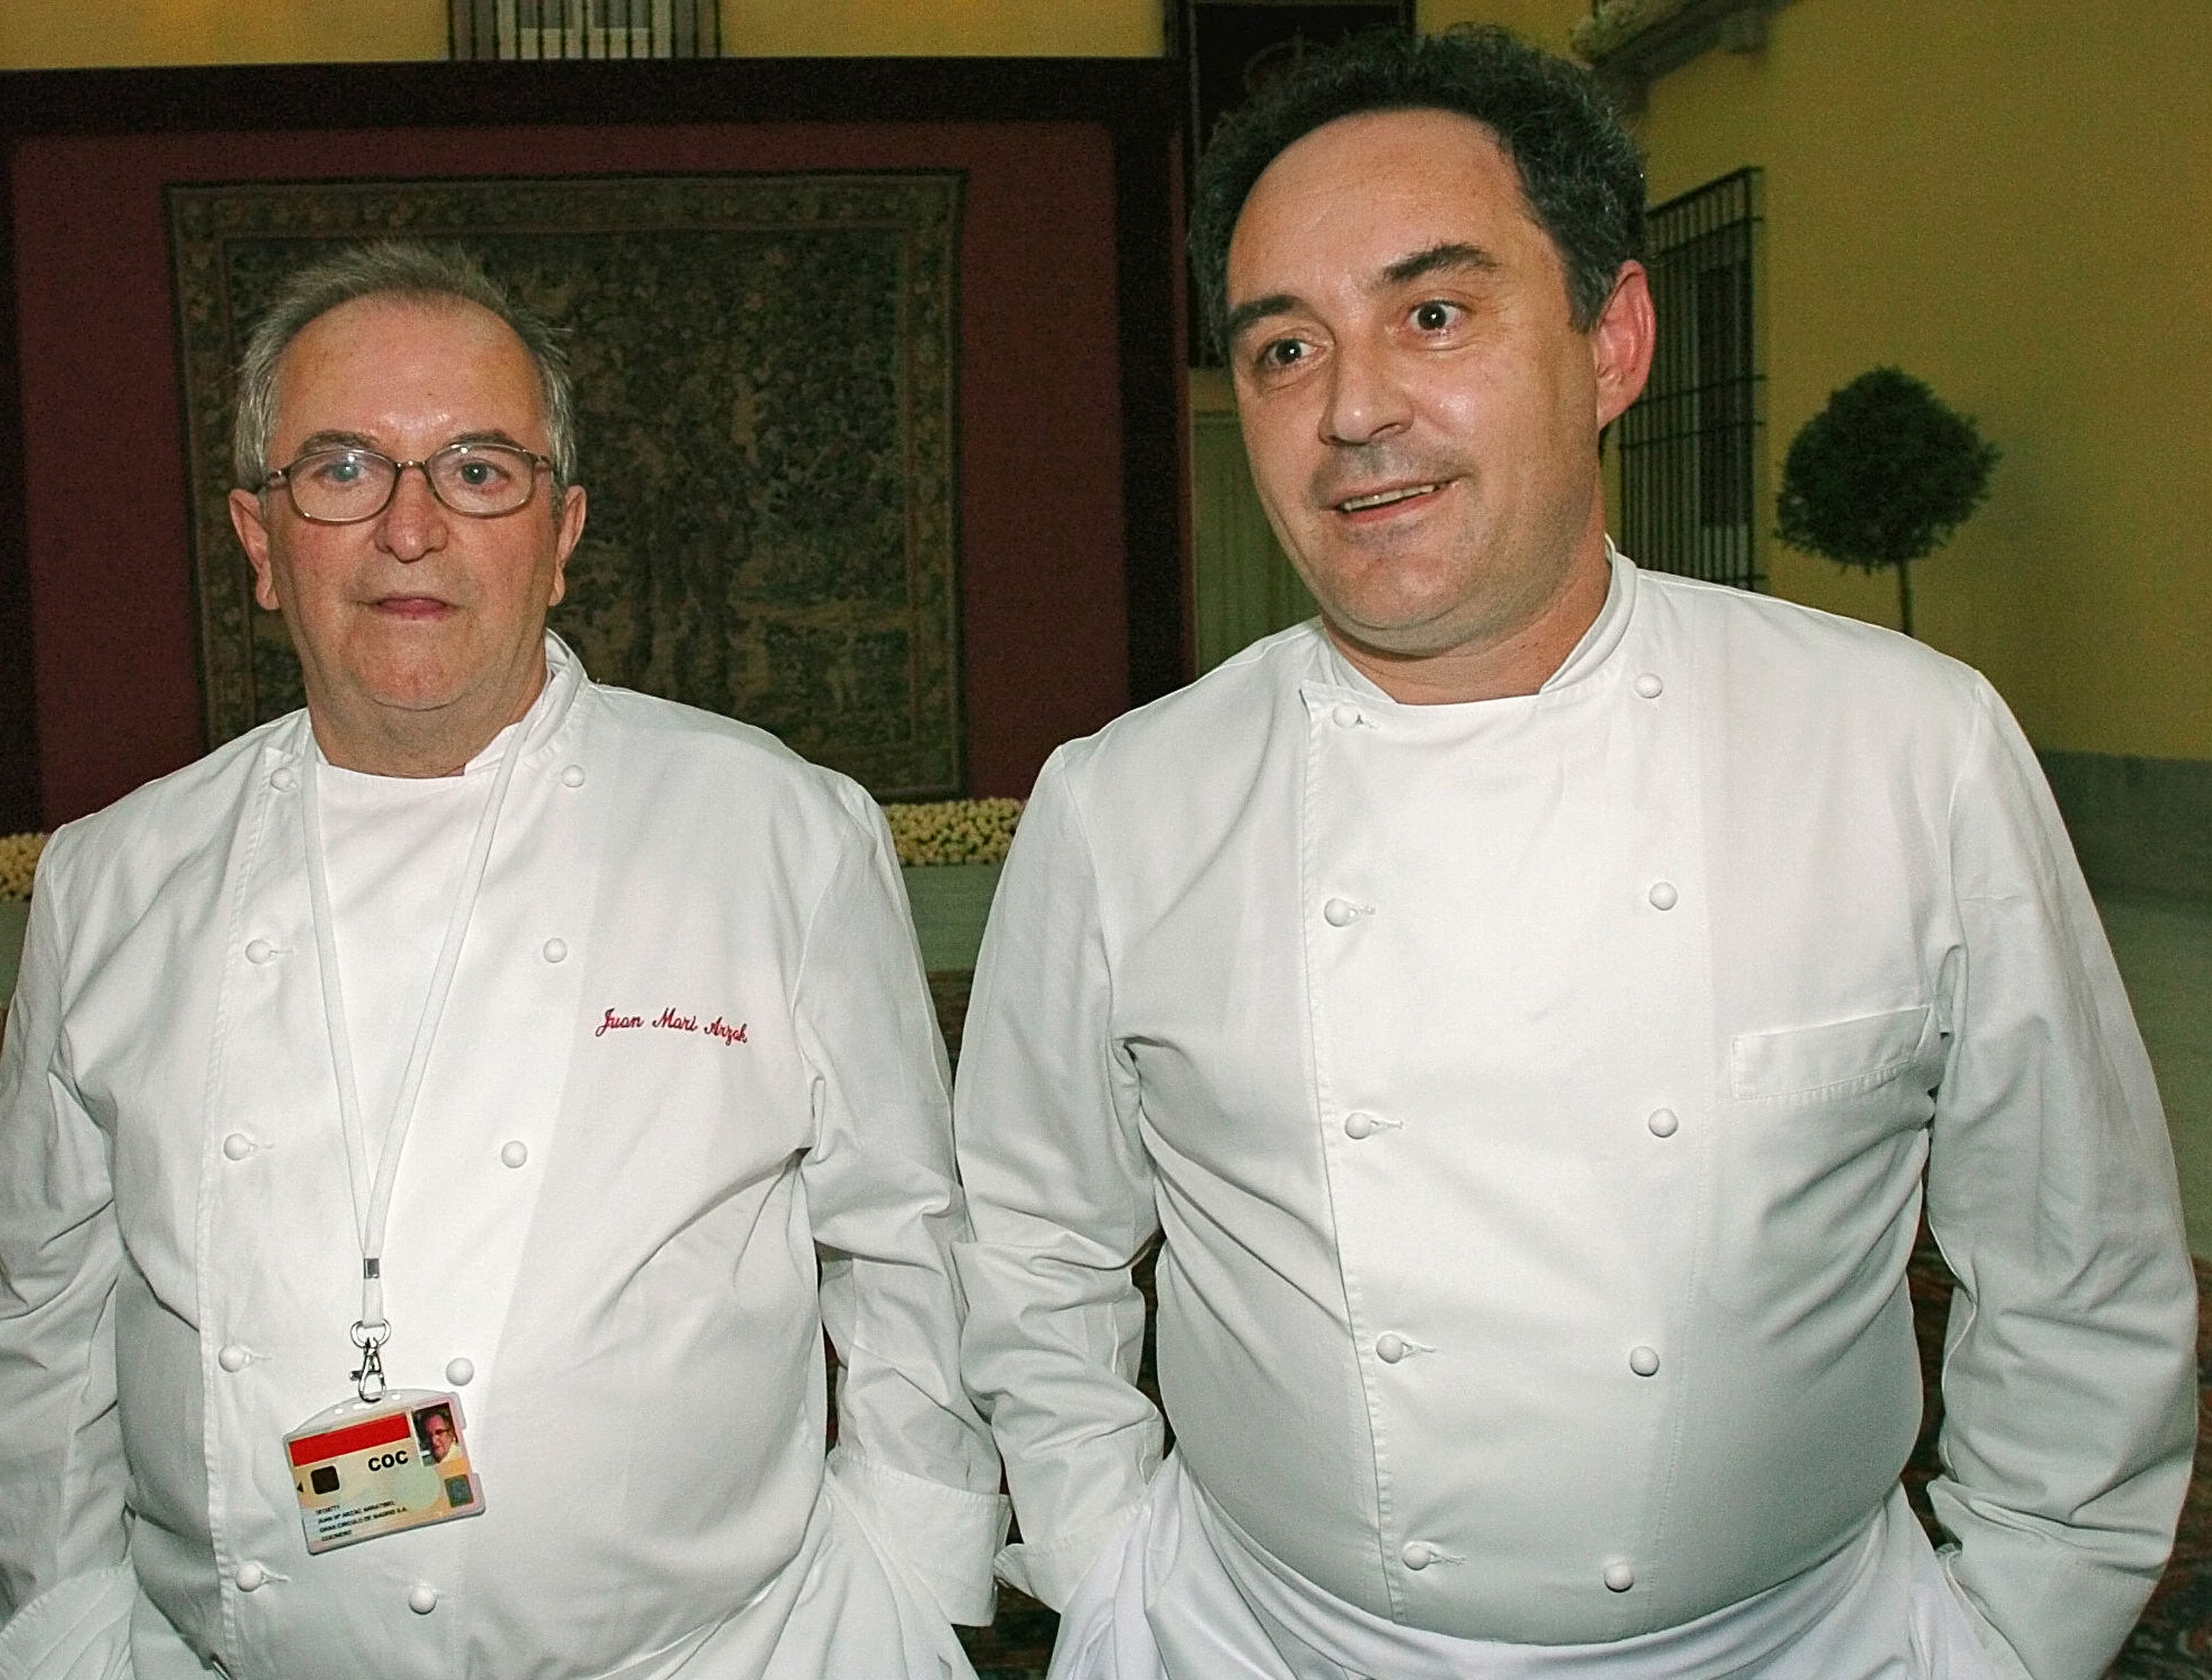 Los chefs Juan Mari Arzak (iz) y Ferran Adrià (de).